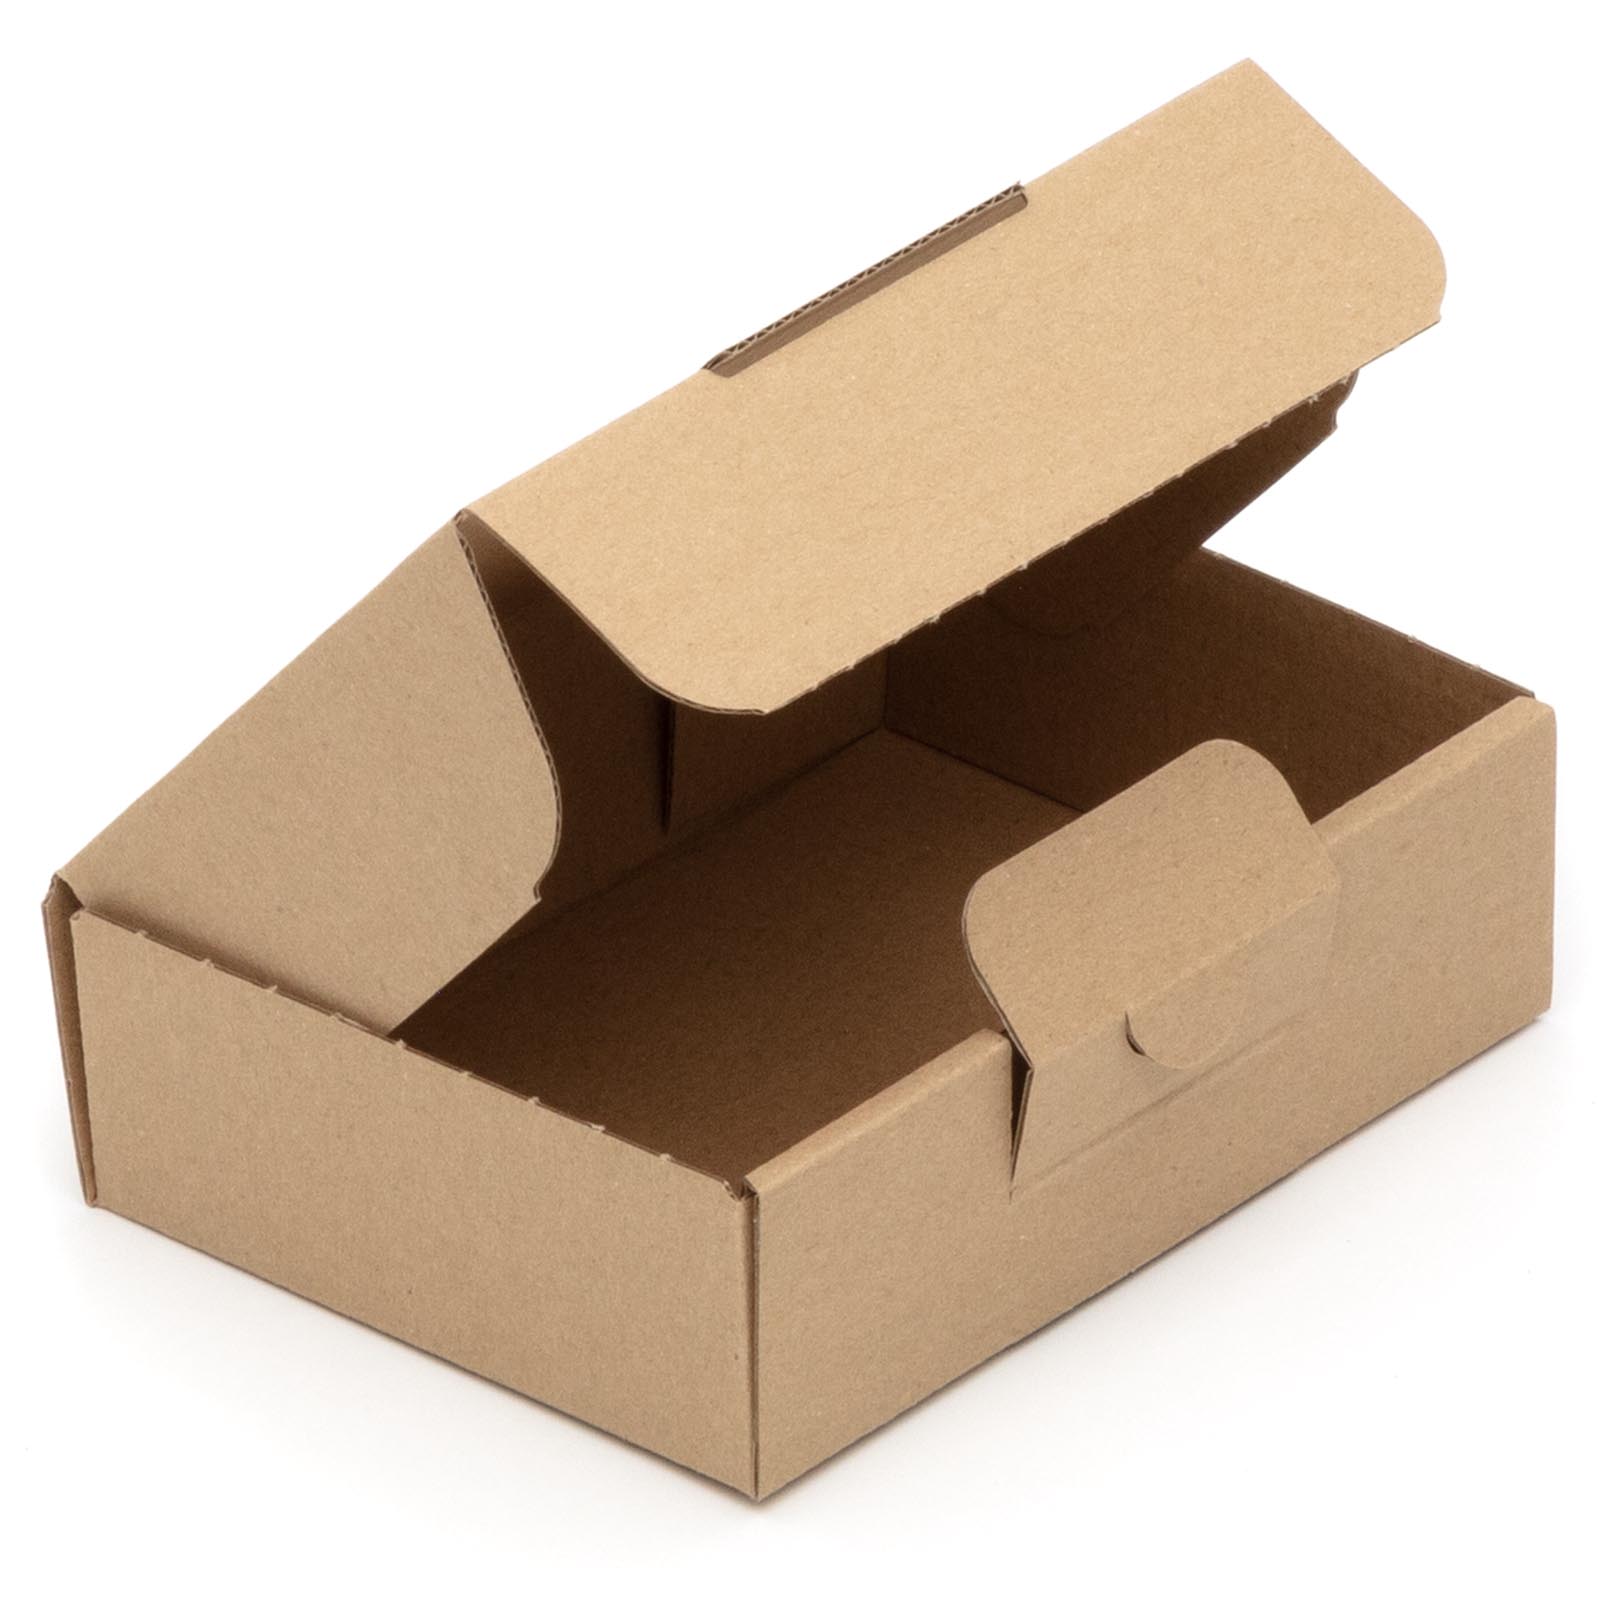 100 Versand Kartons 320 x 250 x 120 mm Schachtel Faltkarton Verpackung Box DHL